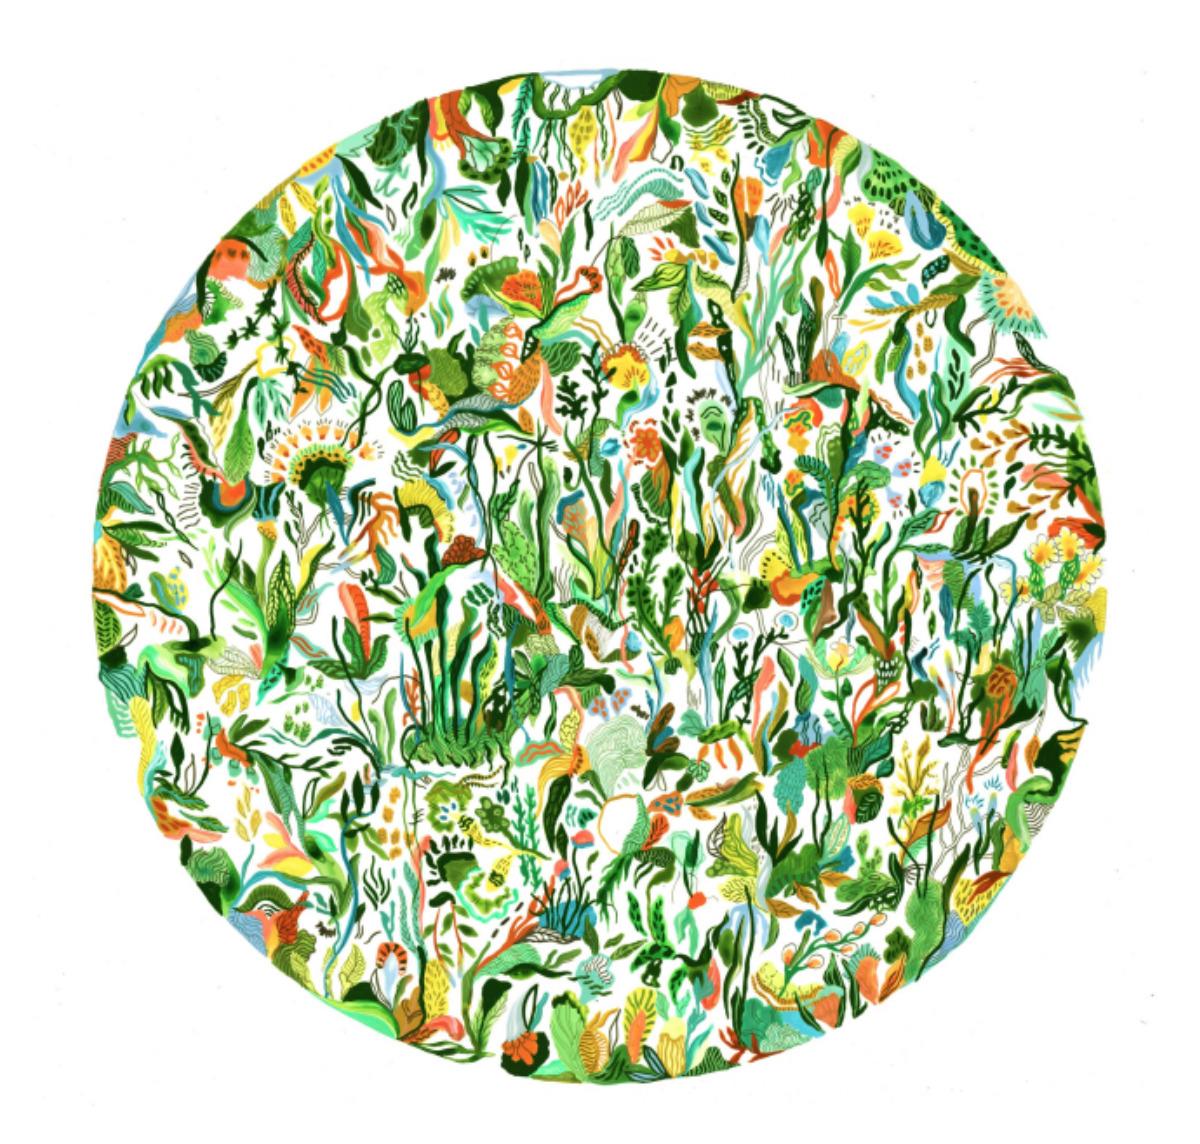 Rin Lack Abstract Print - Livia- Floral Circular artwork piece on Ply  